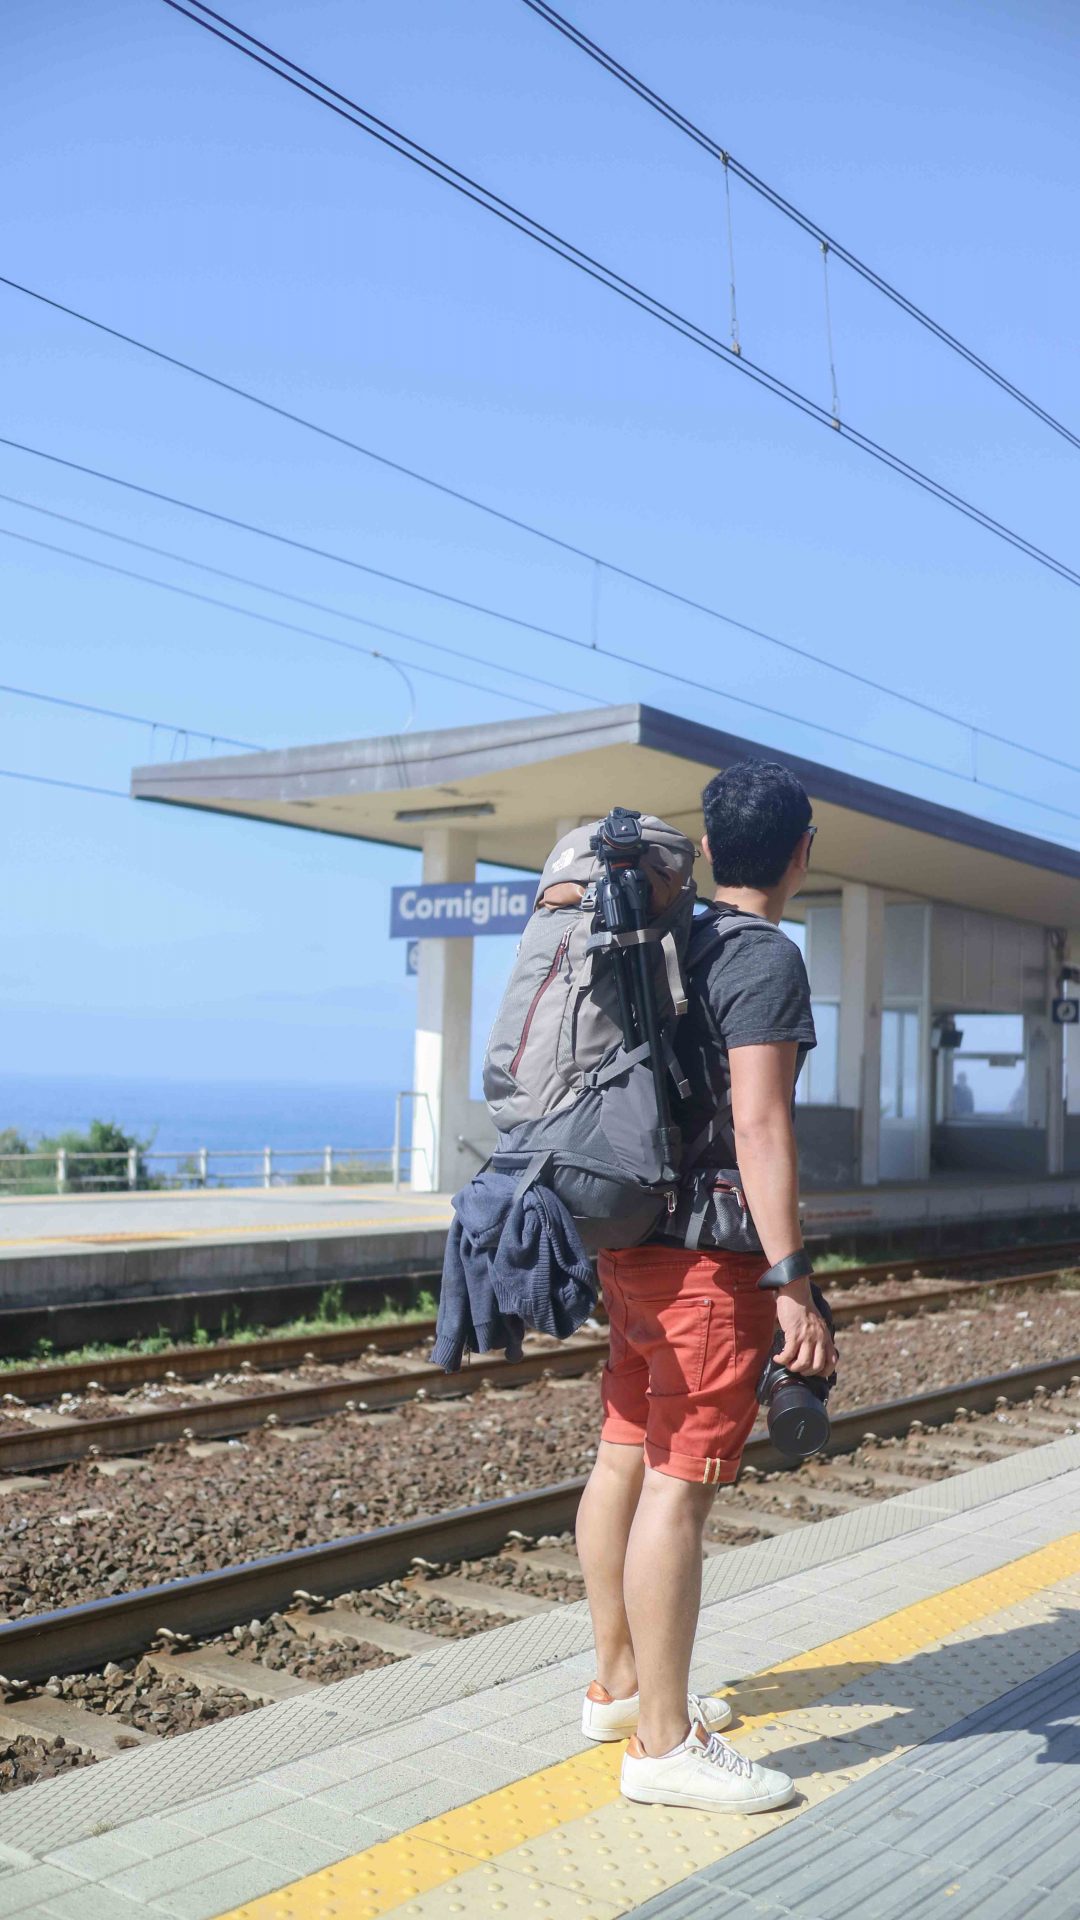 Guide de voyage en sac à dos en Italie - Backpacking Italy Corniglia